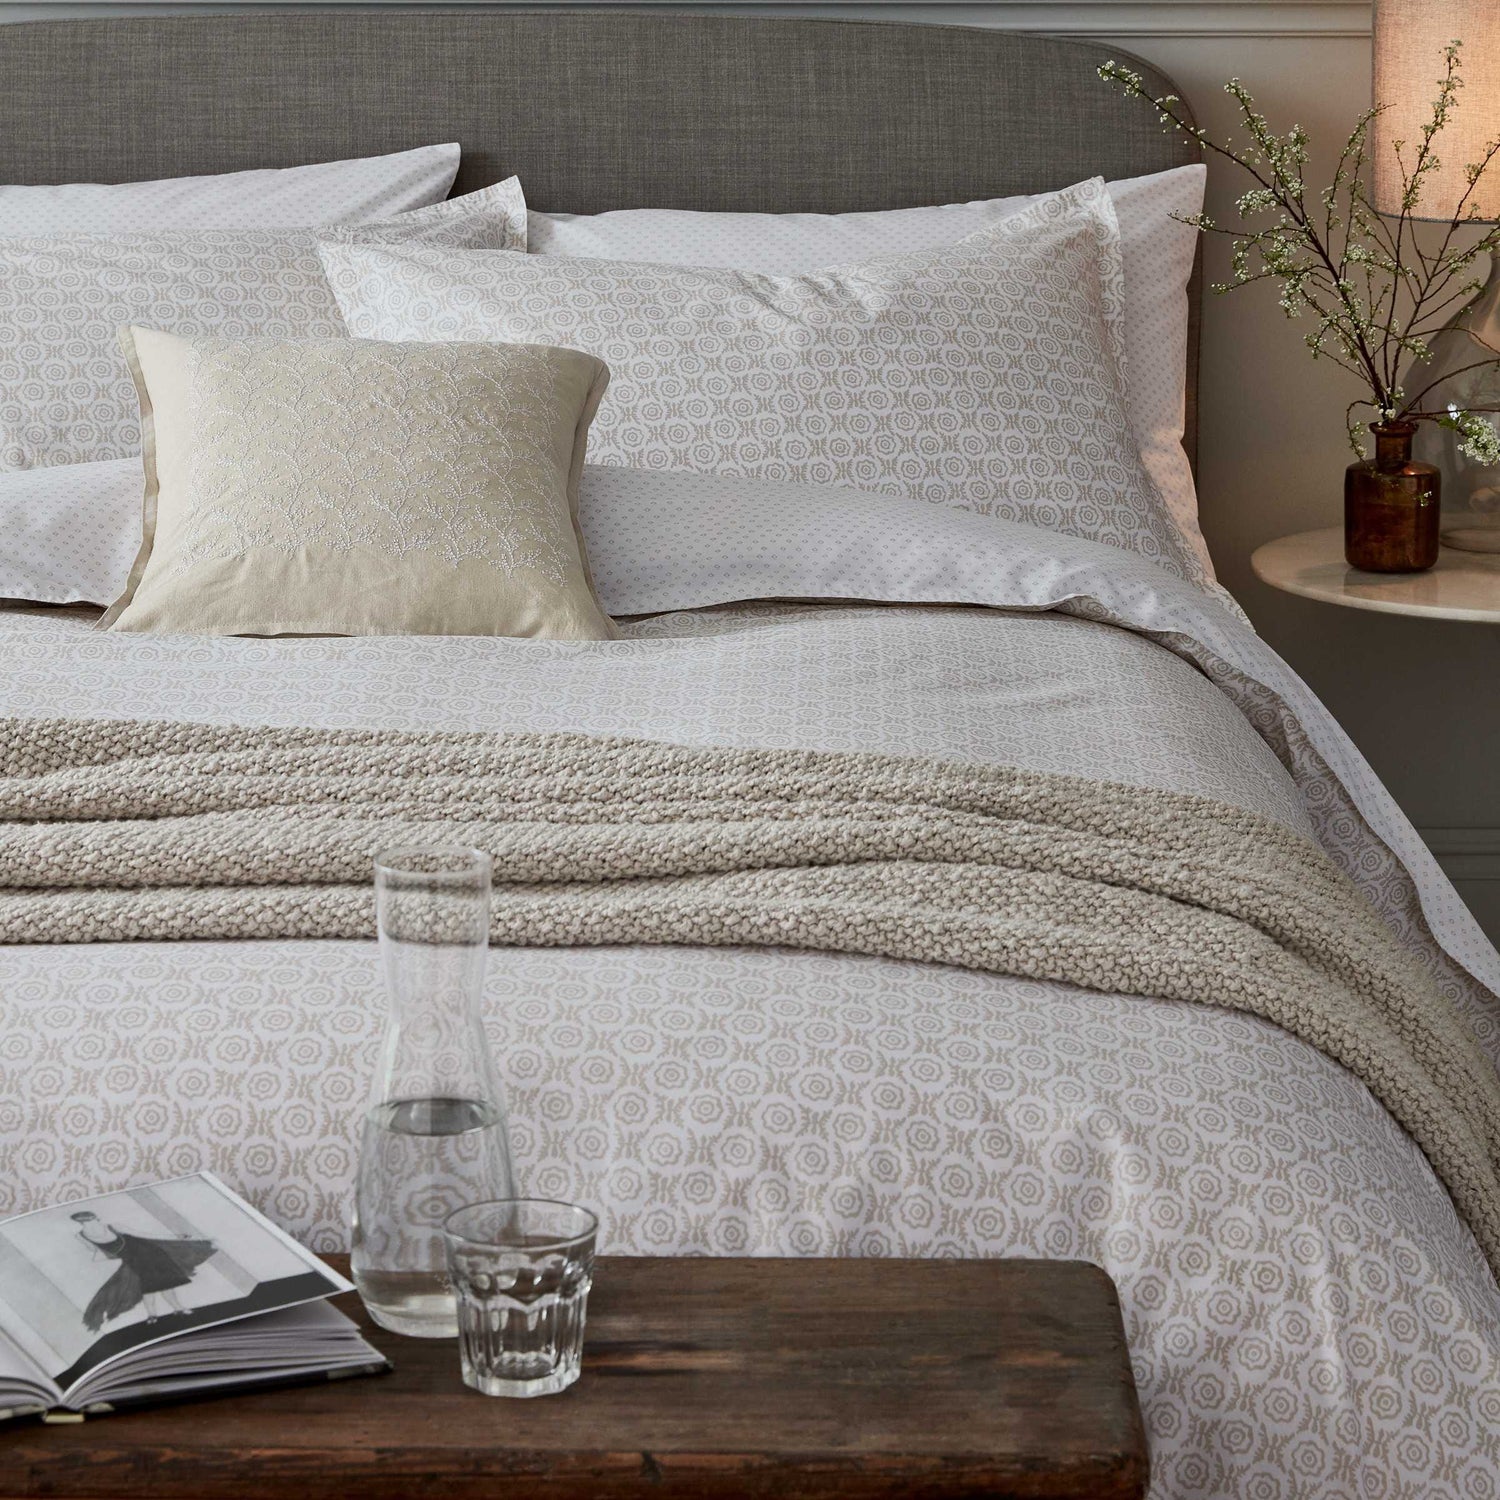 Luxury Patterned Bedding in Linen Tones